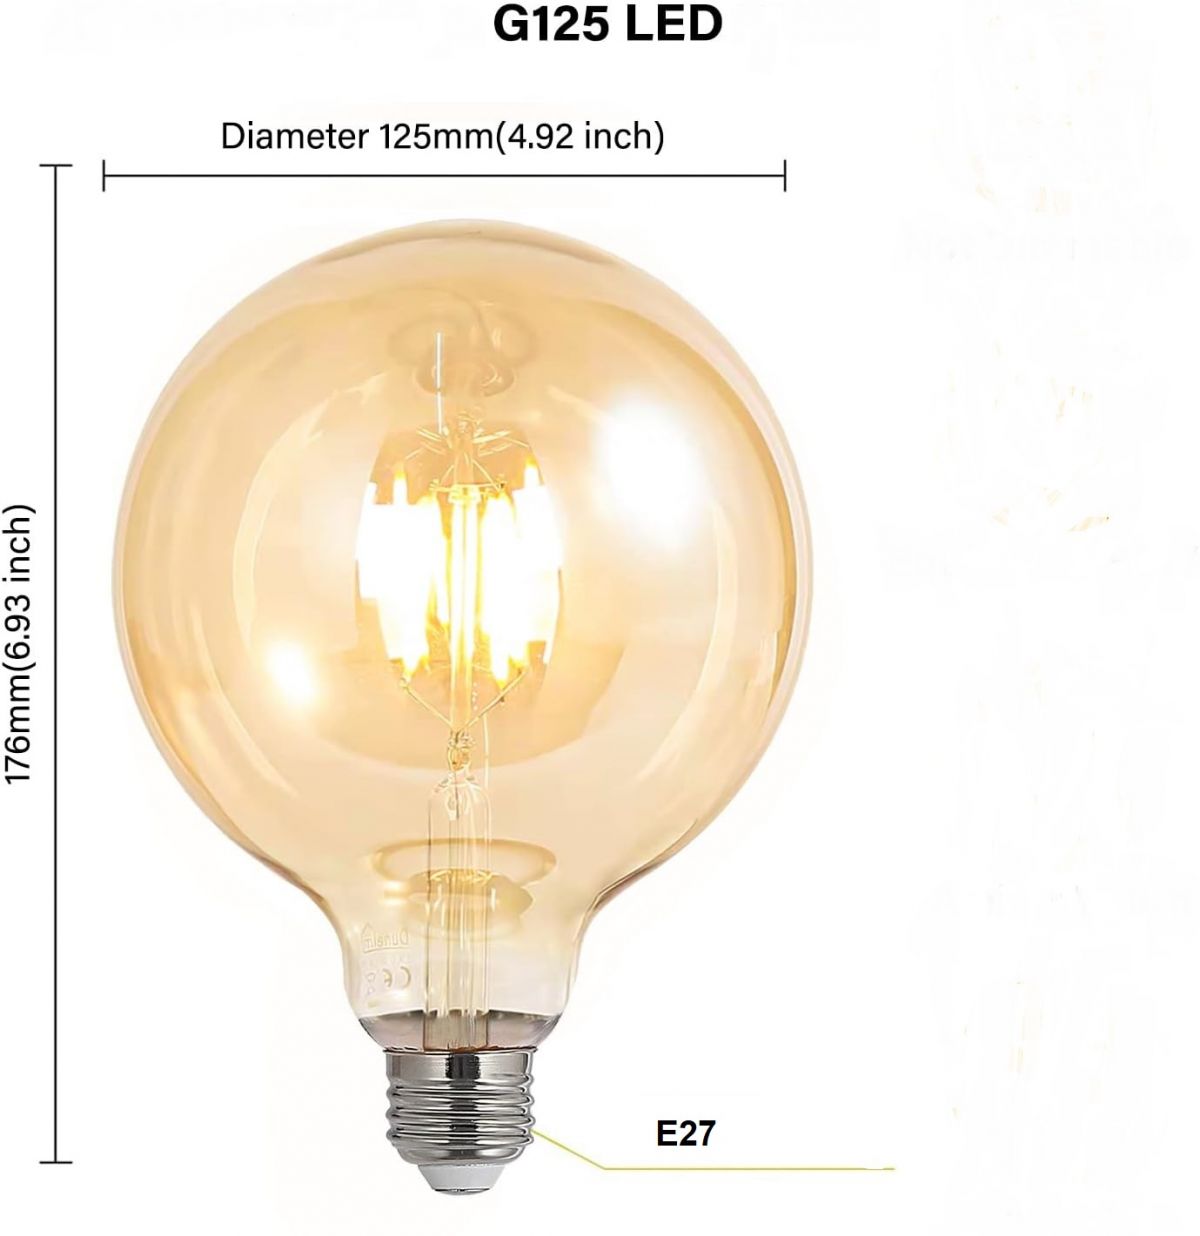 Lambipirn LED Crown G125 E27, 4W, 320 lm